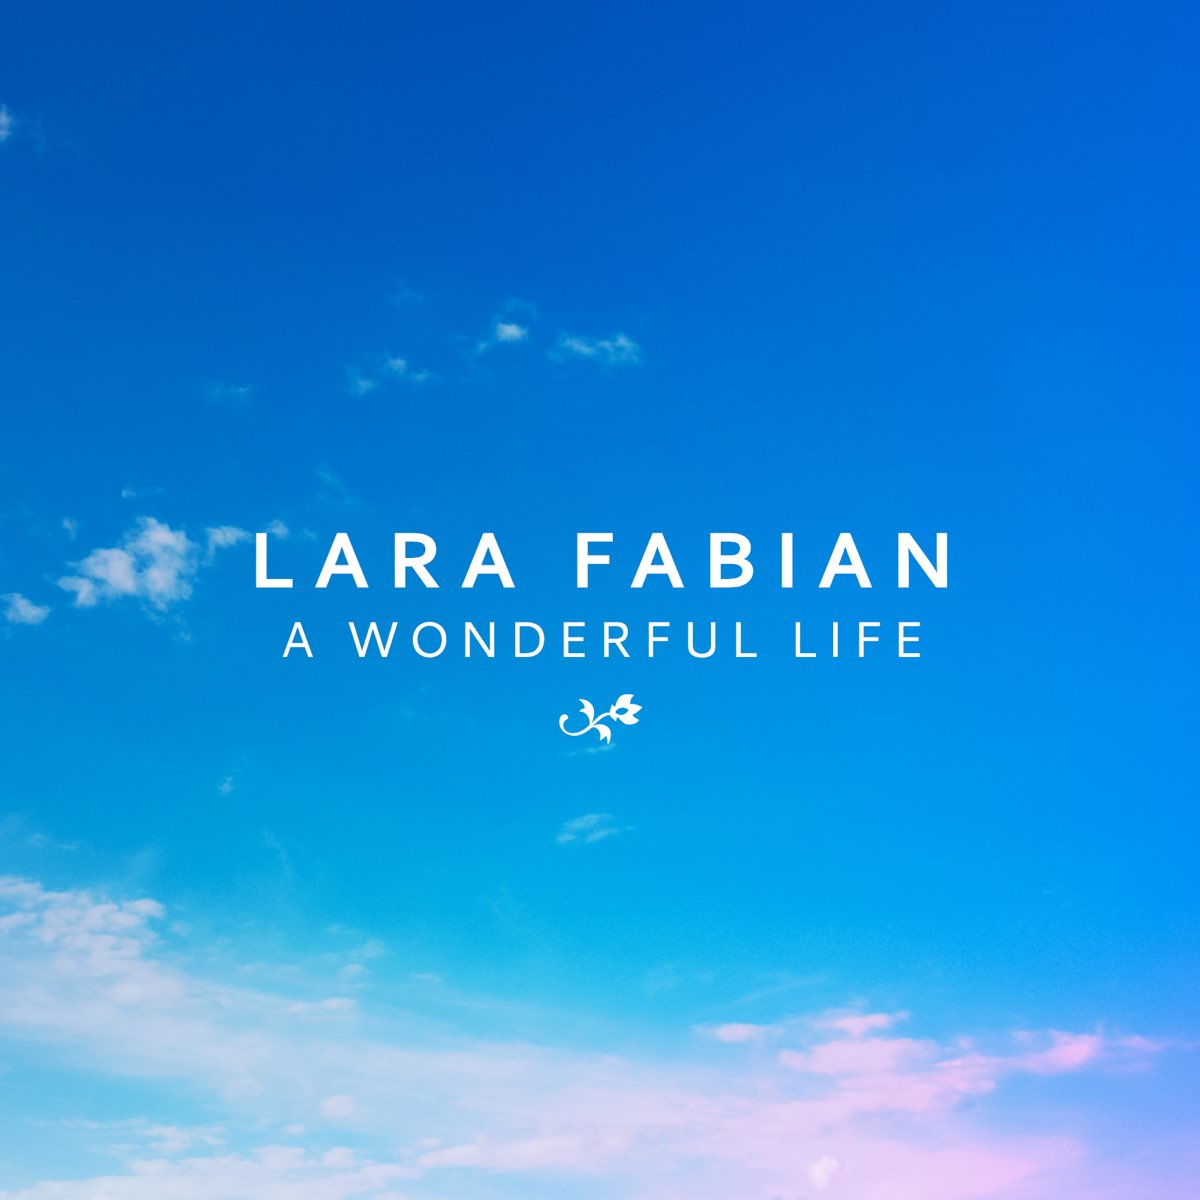 Wonderful life. Lara Fabian wonderful Life. Lara Fabian - (2004) a wonderful Life. Lara Fabian intoxicated. Lara Fabian wonderful Life Cover.